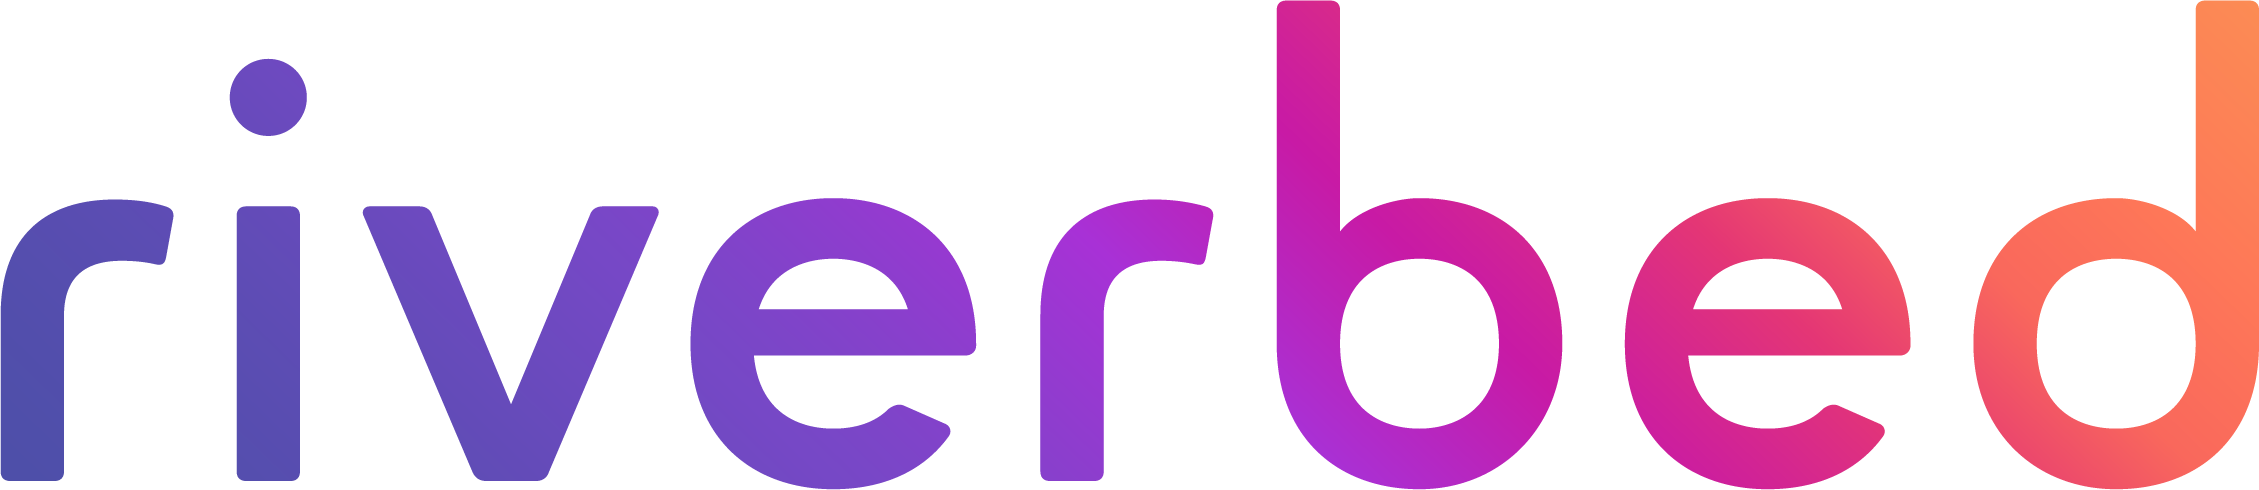 Riverbed logo